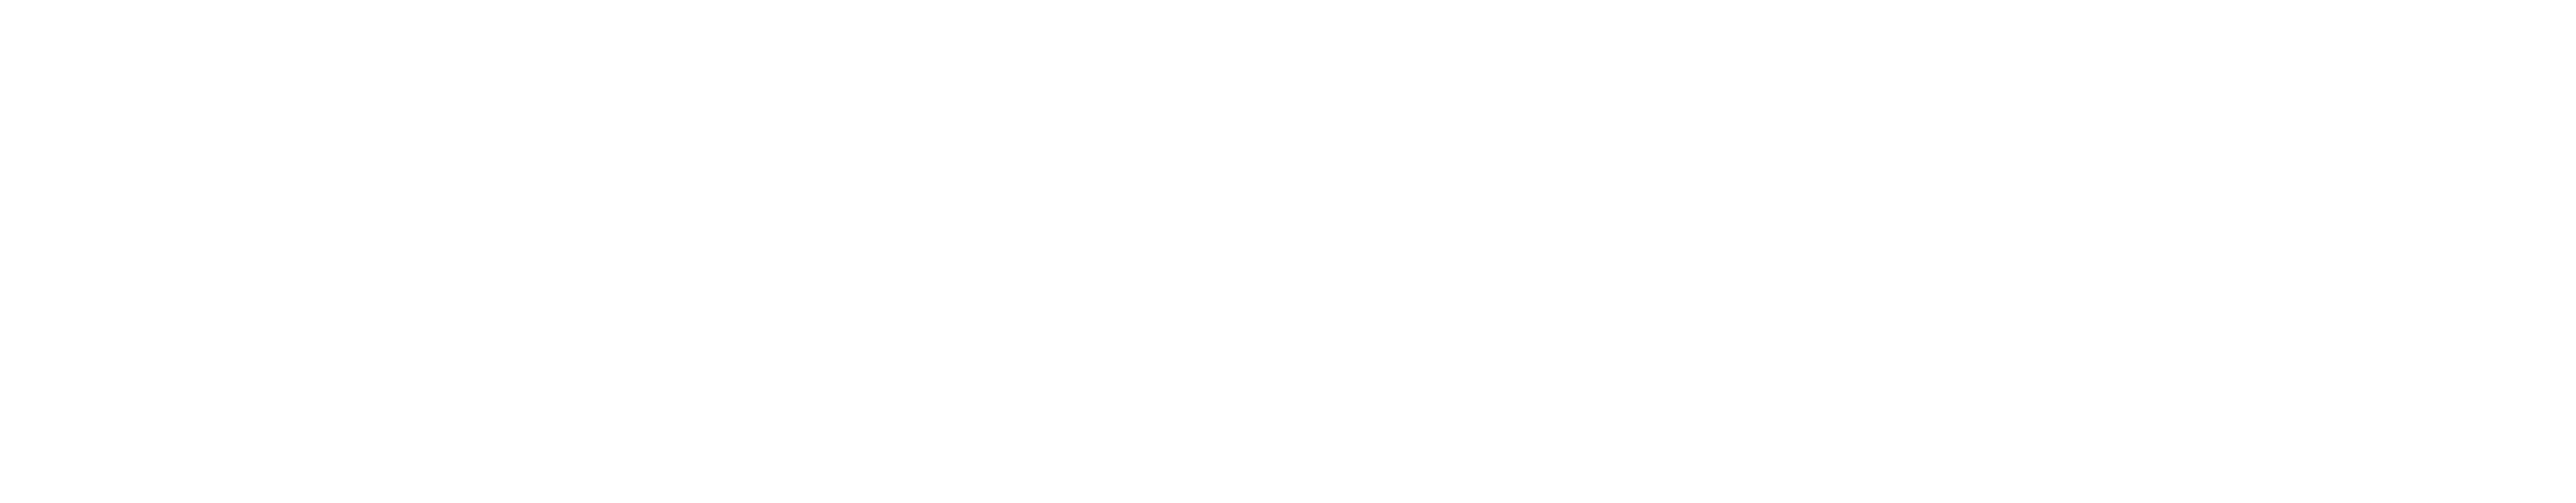 Snowball Capital